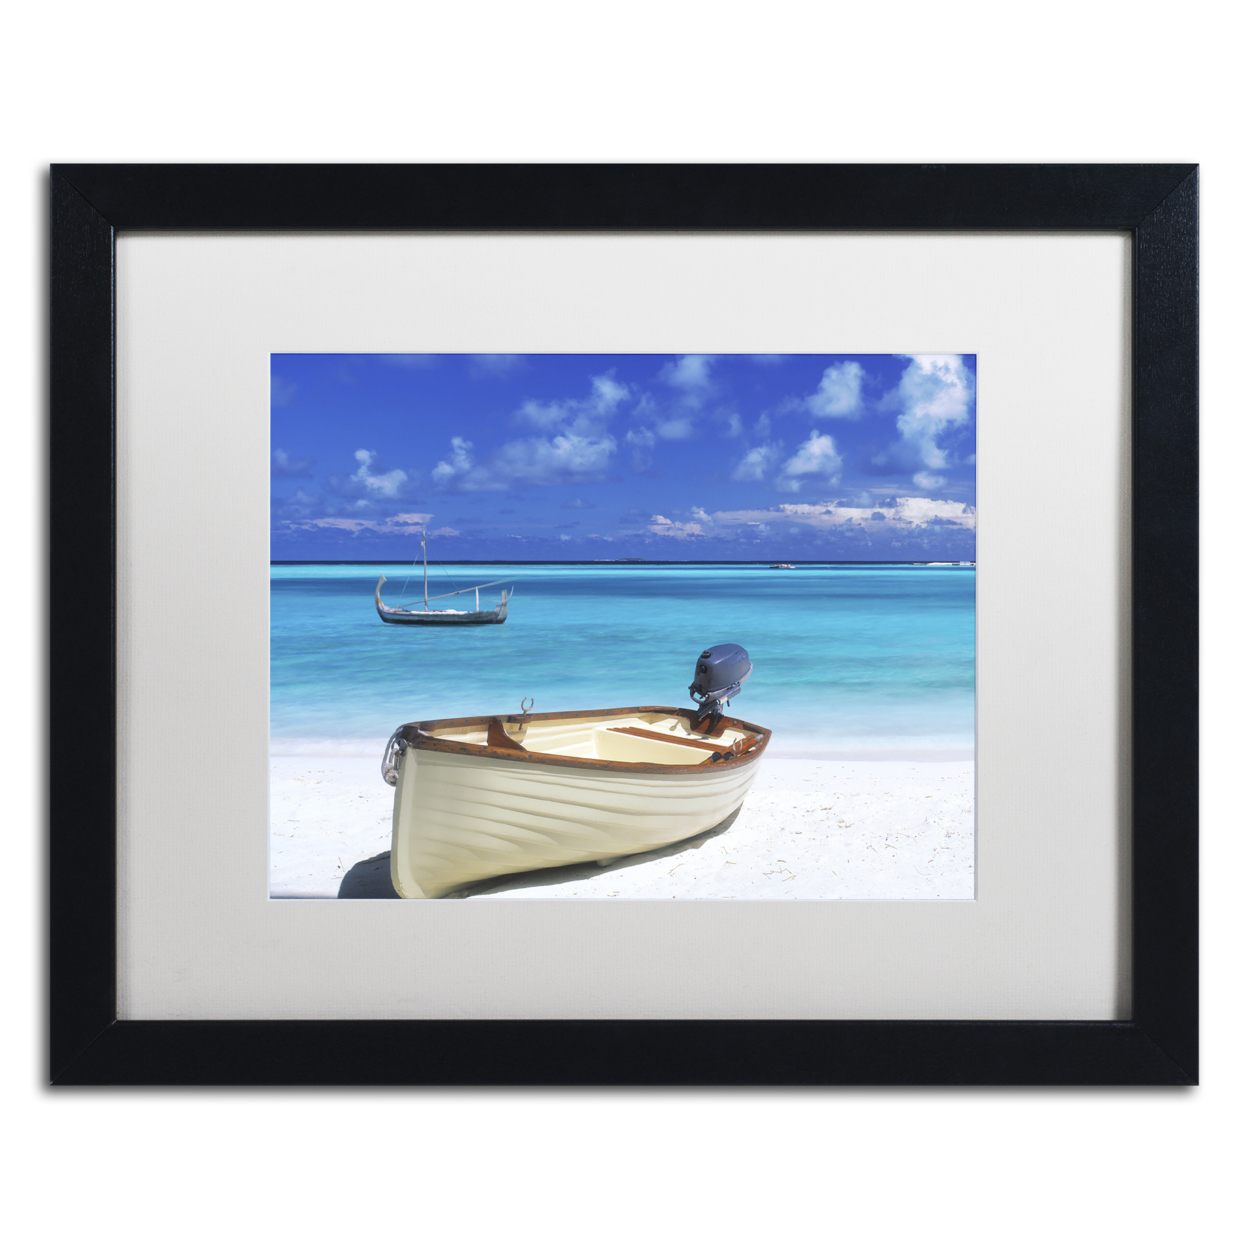 David Evans 'Boats-Gili Lankanfushi' Black Wooden Framed Art 18 X 22 Inches